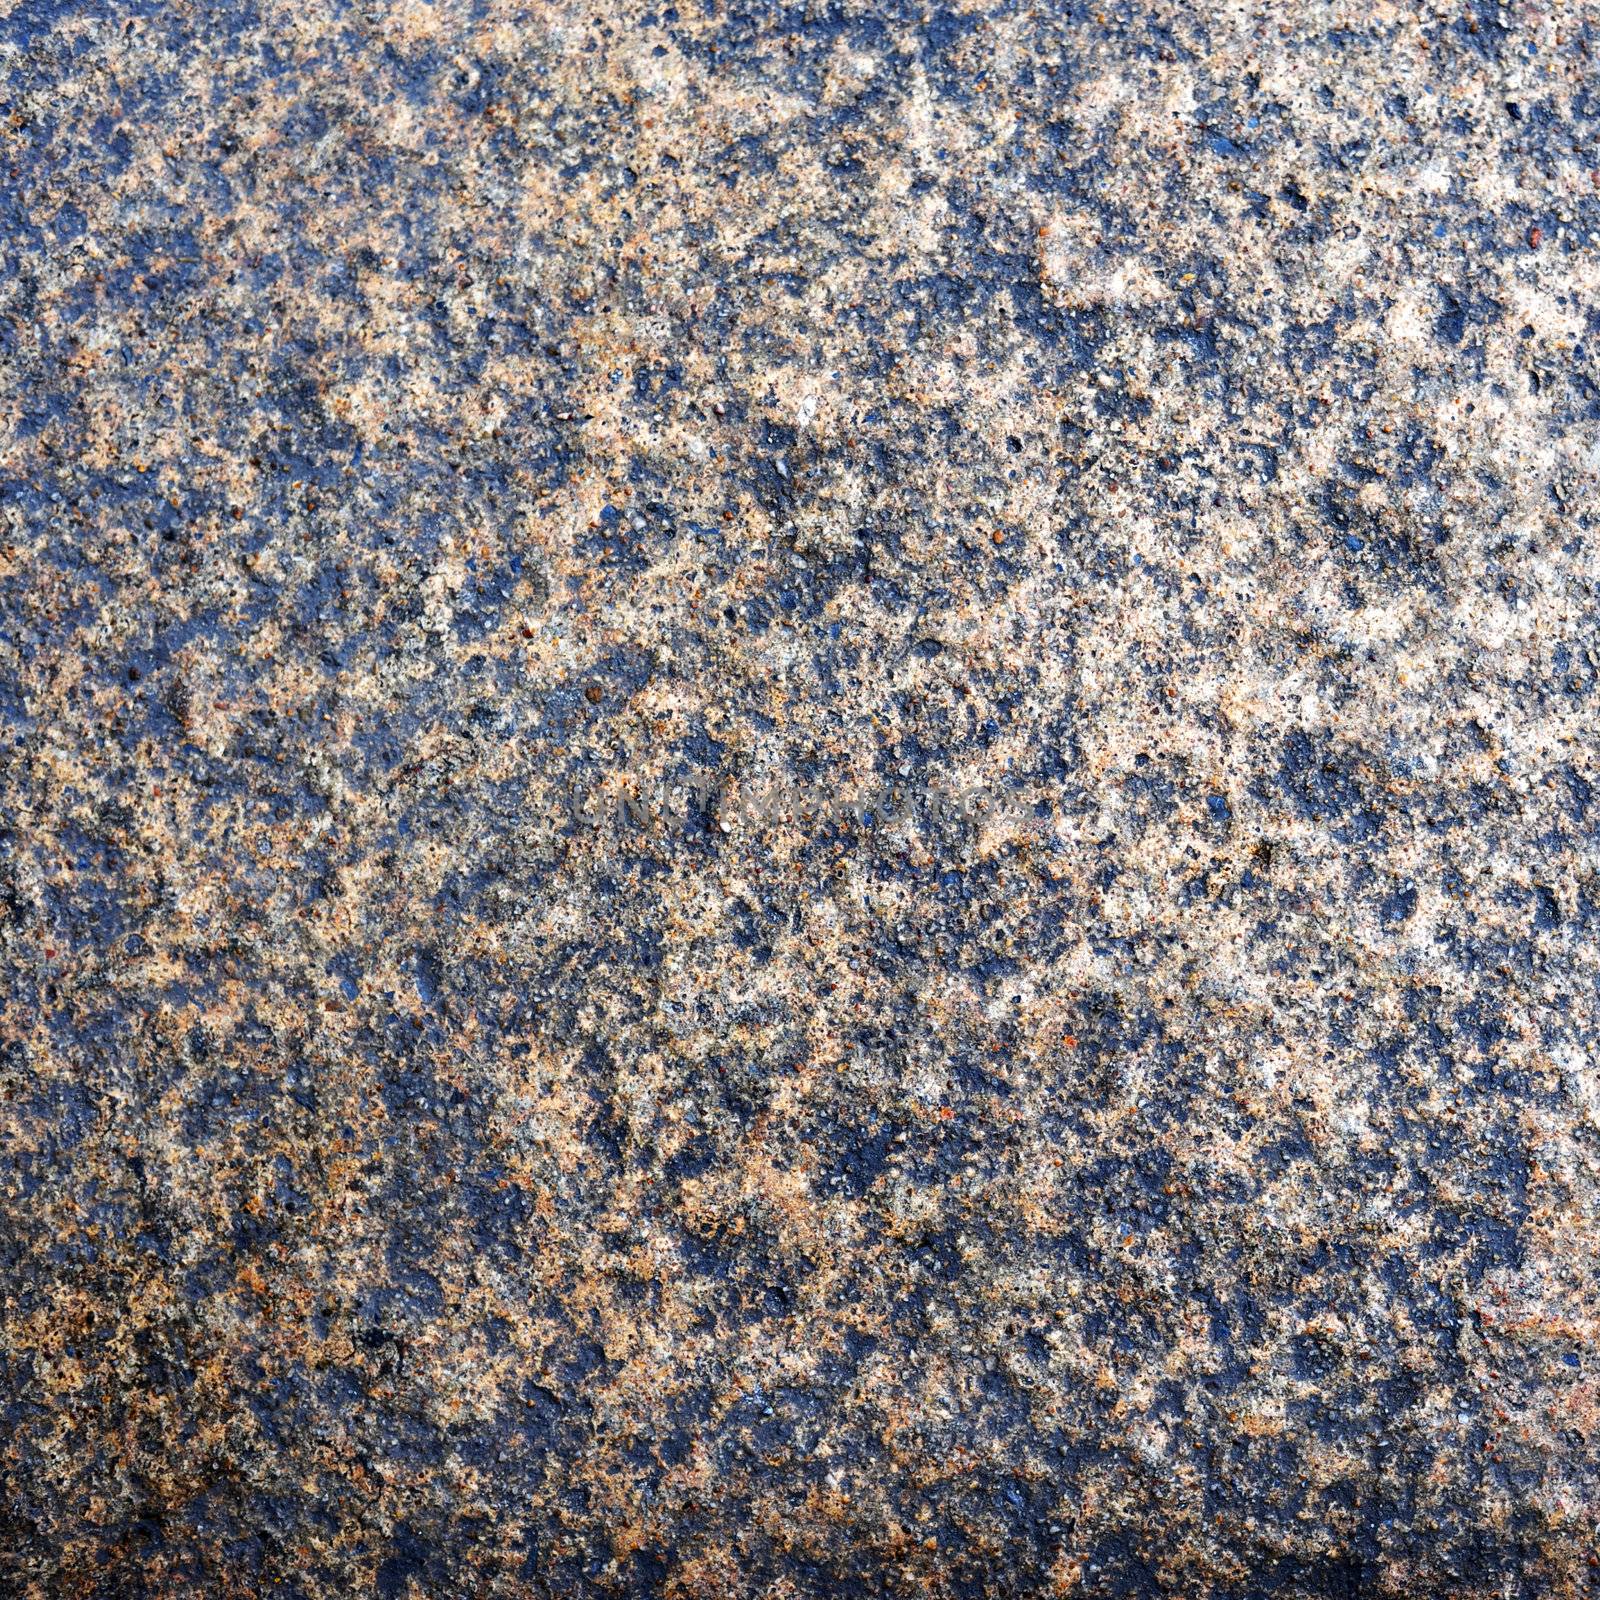 Original Granite by antpkr